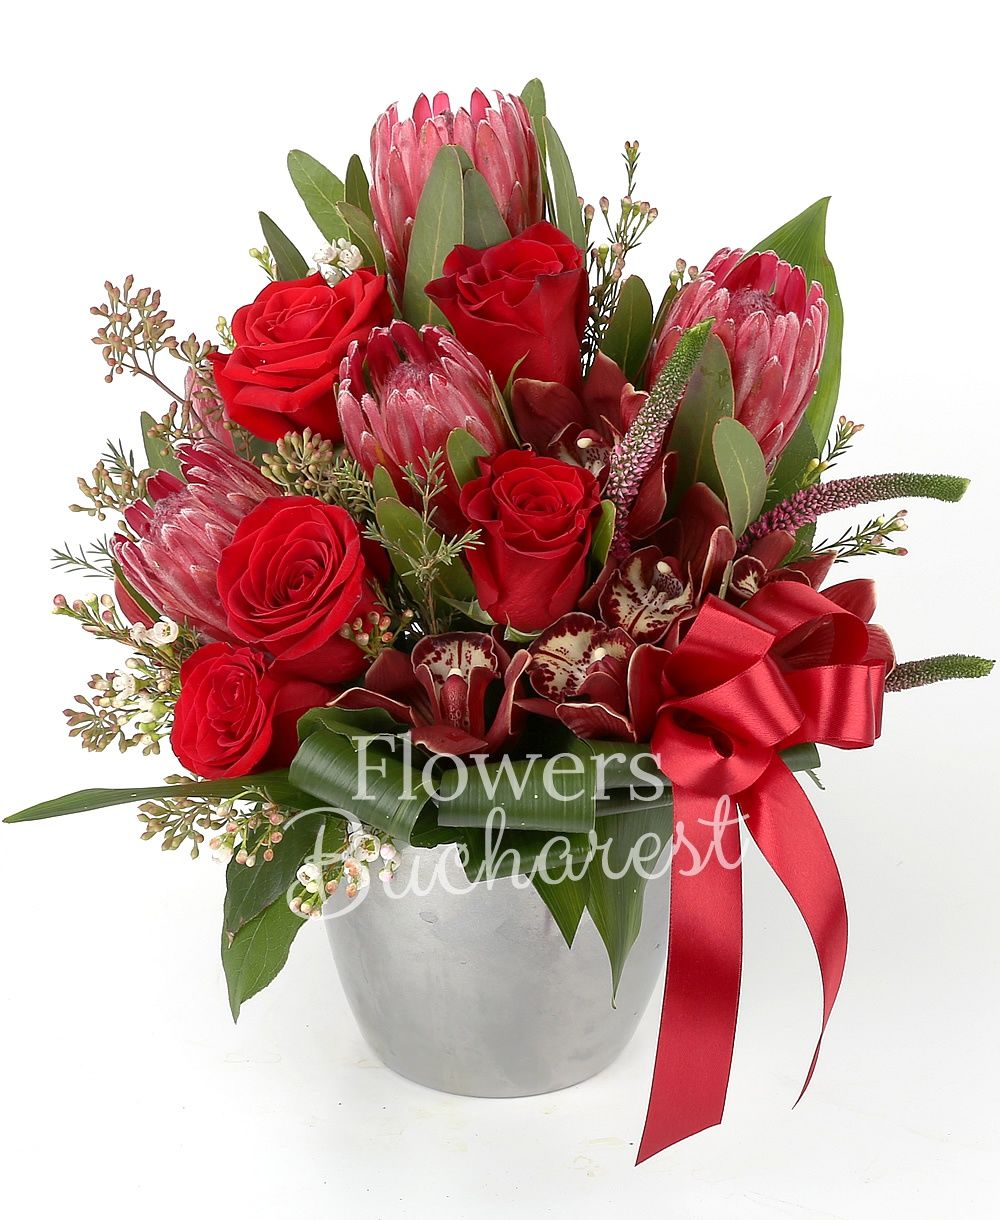 5 red roses, 5 proteea, garnet cymbidium, 3 pink veronica, white waxflower, greenery, ceramic vase